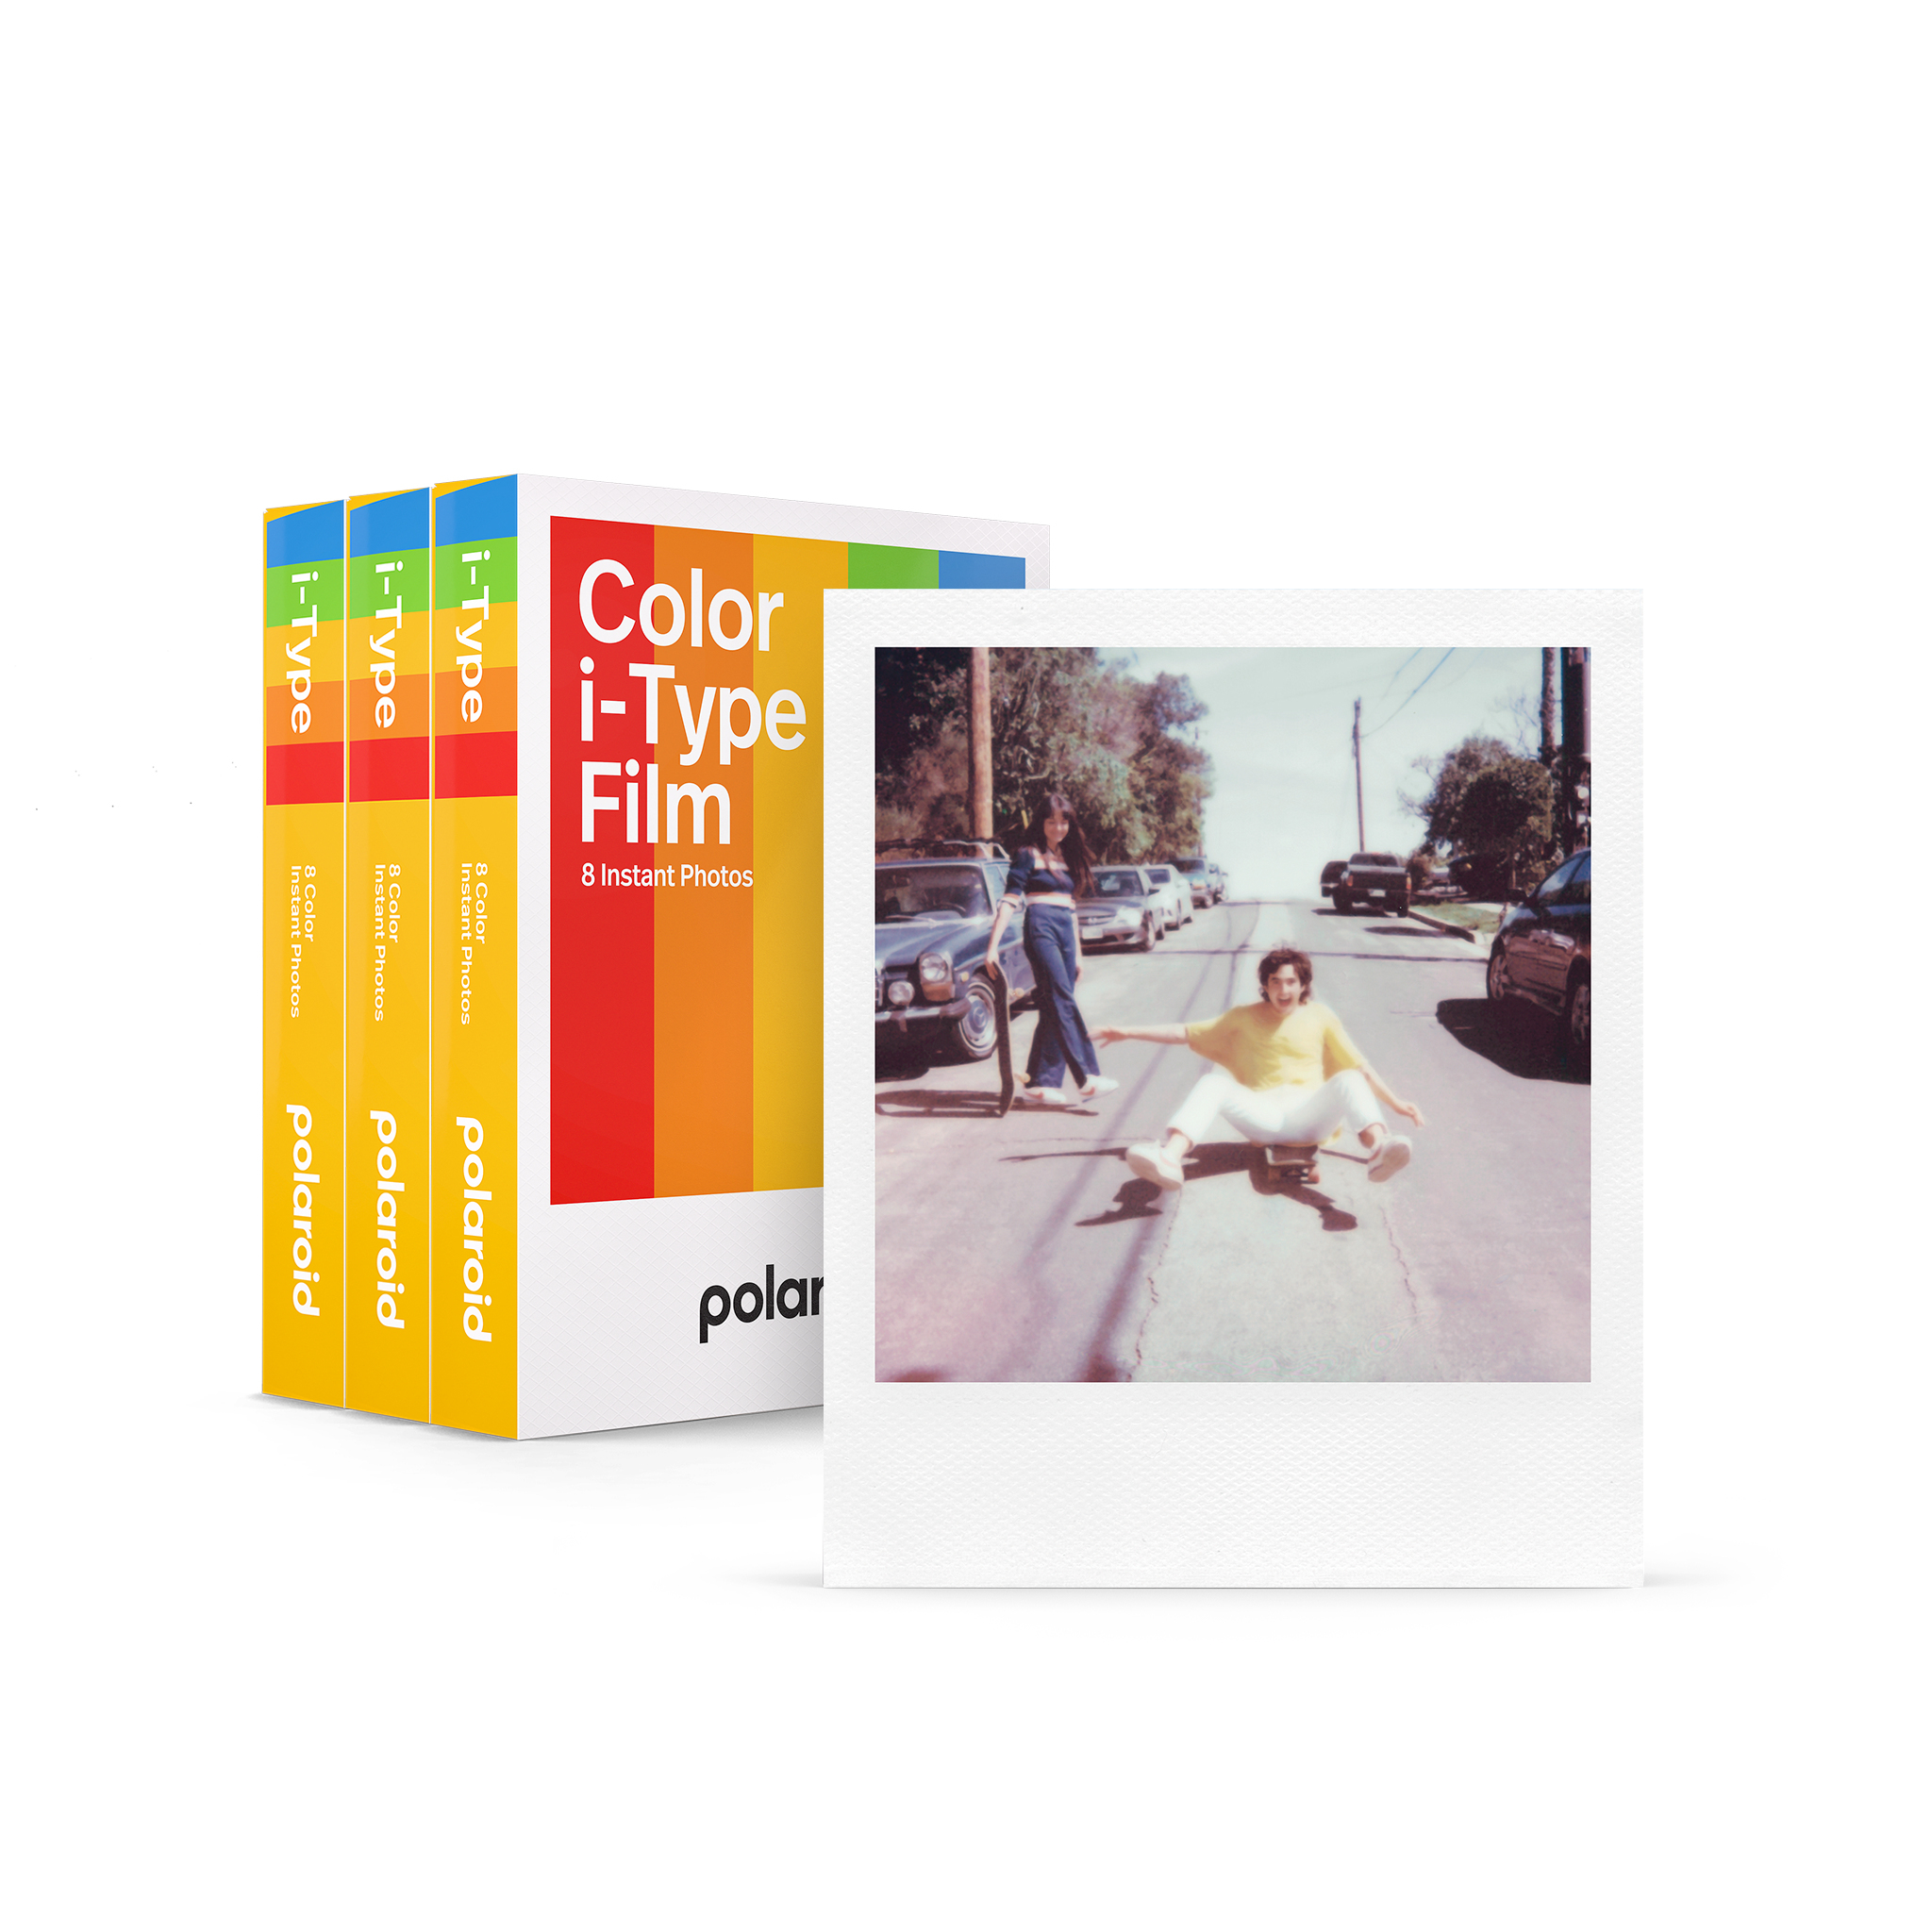 Polaroid Color i-Type Film Triple Pack